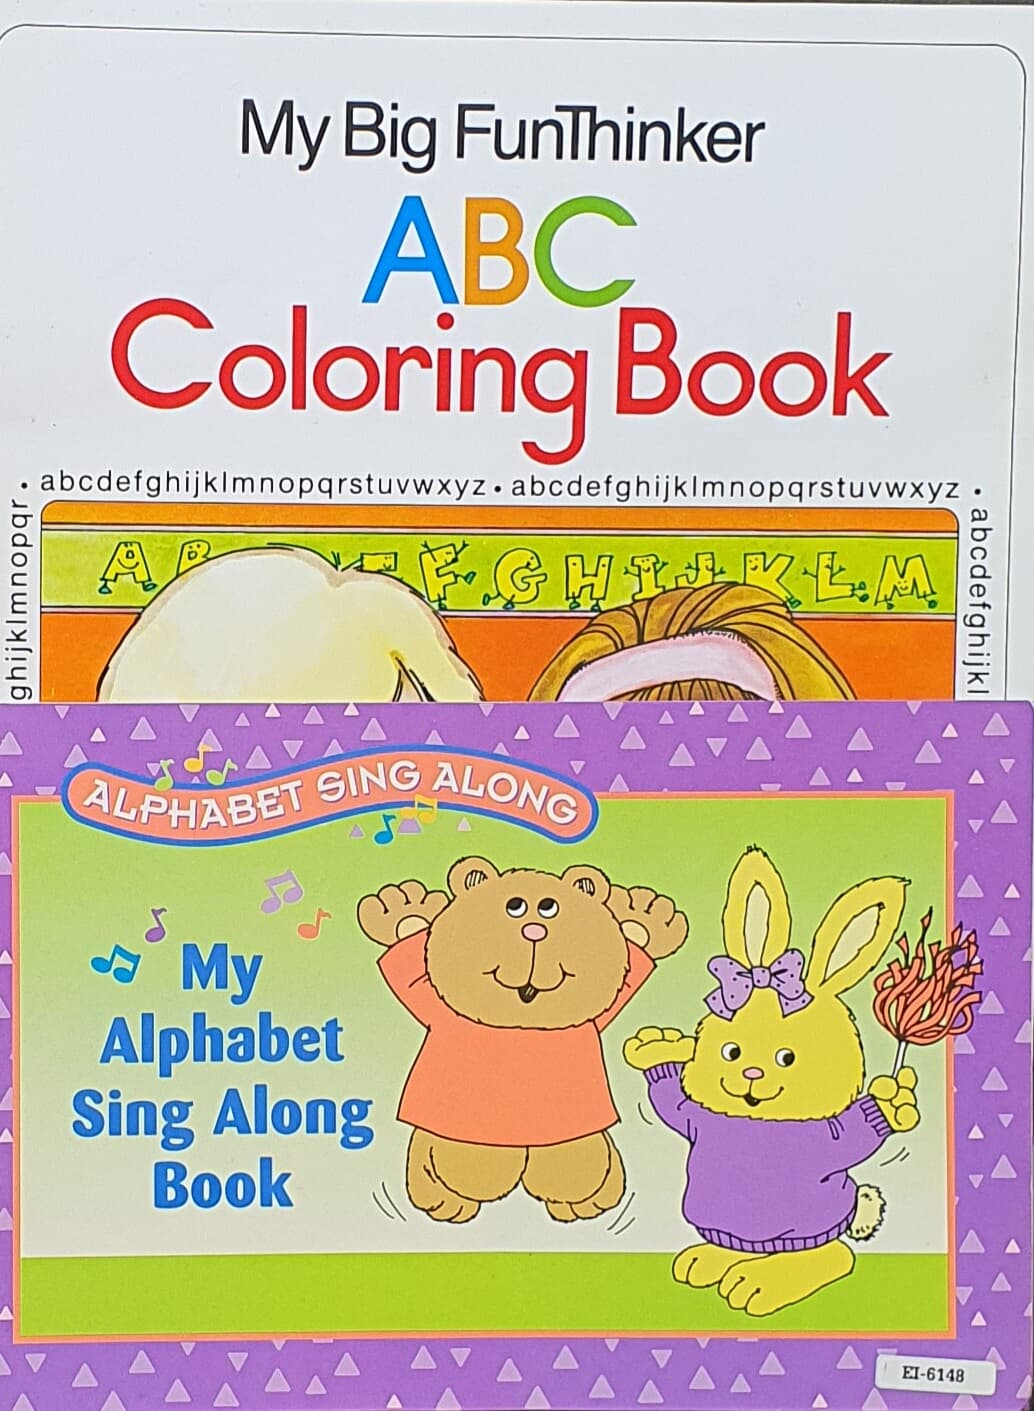 My big funthinker abc coloring book(Activity book 2권,audio tape)